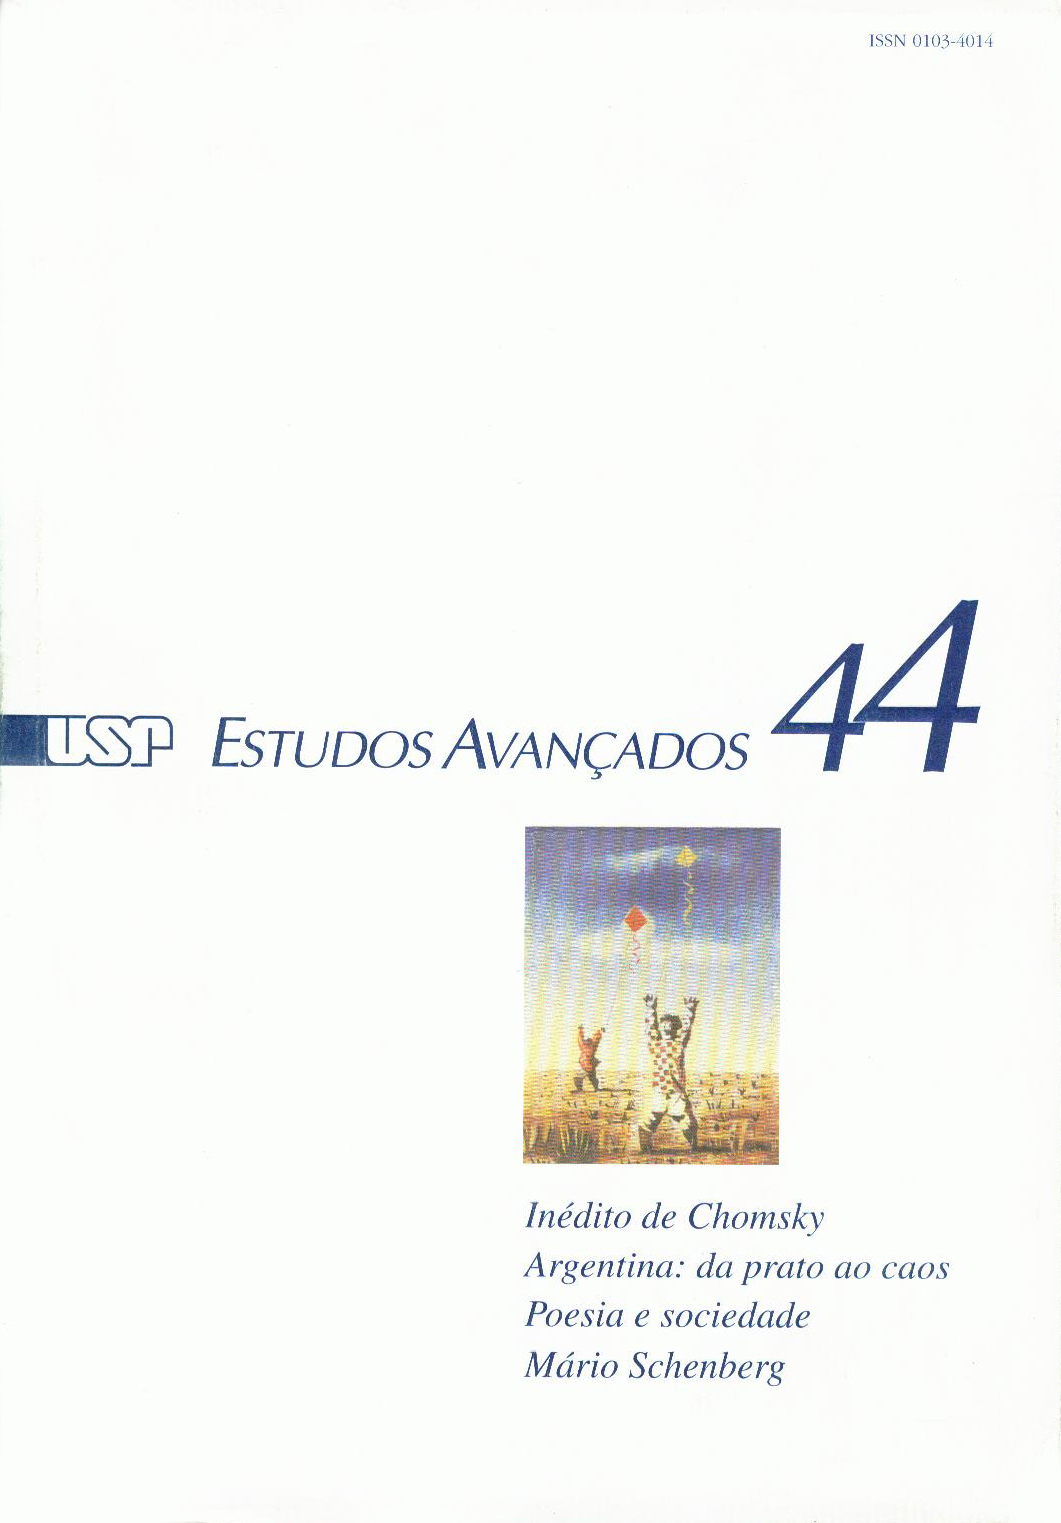 					Visualizar v. 16 n. 44 (2002)
				